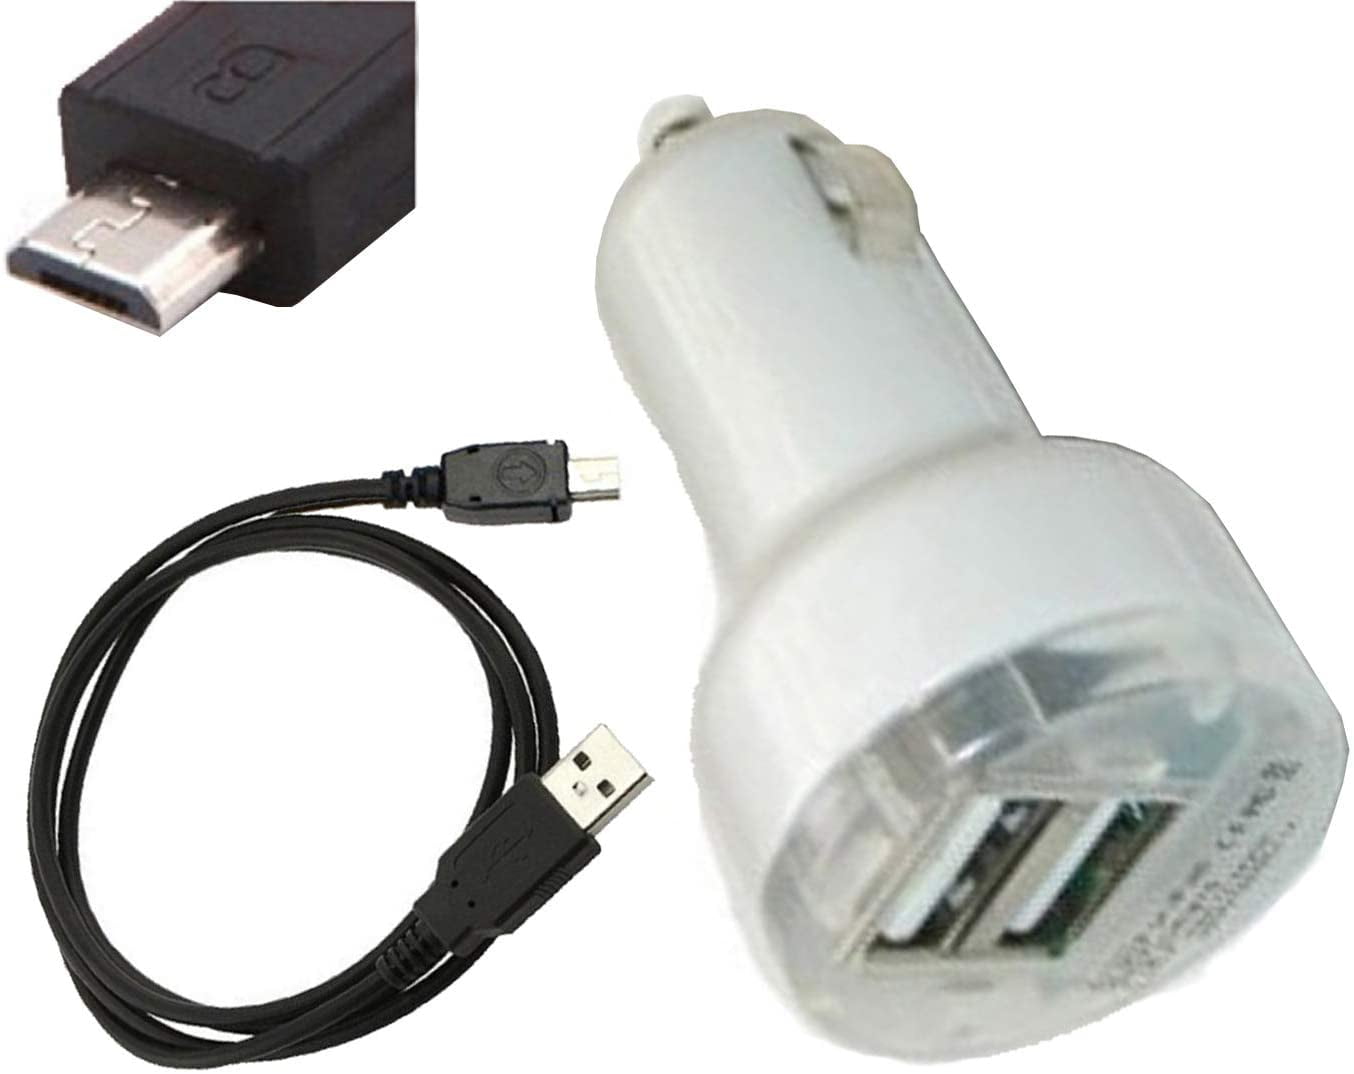 Micro USB OTG adaptador cable para kodak im5